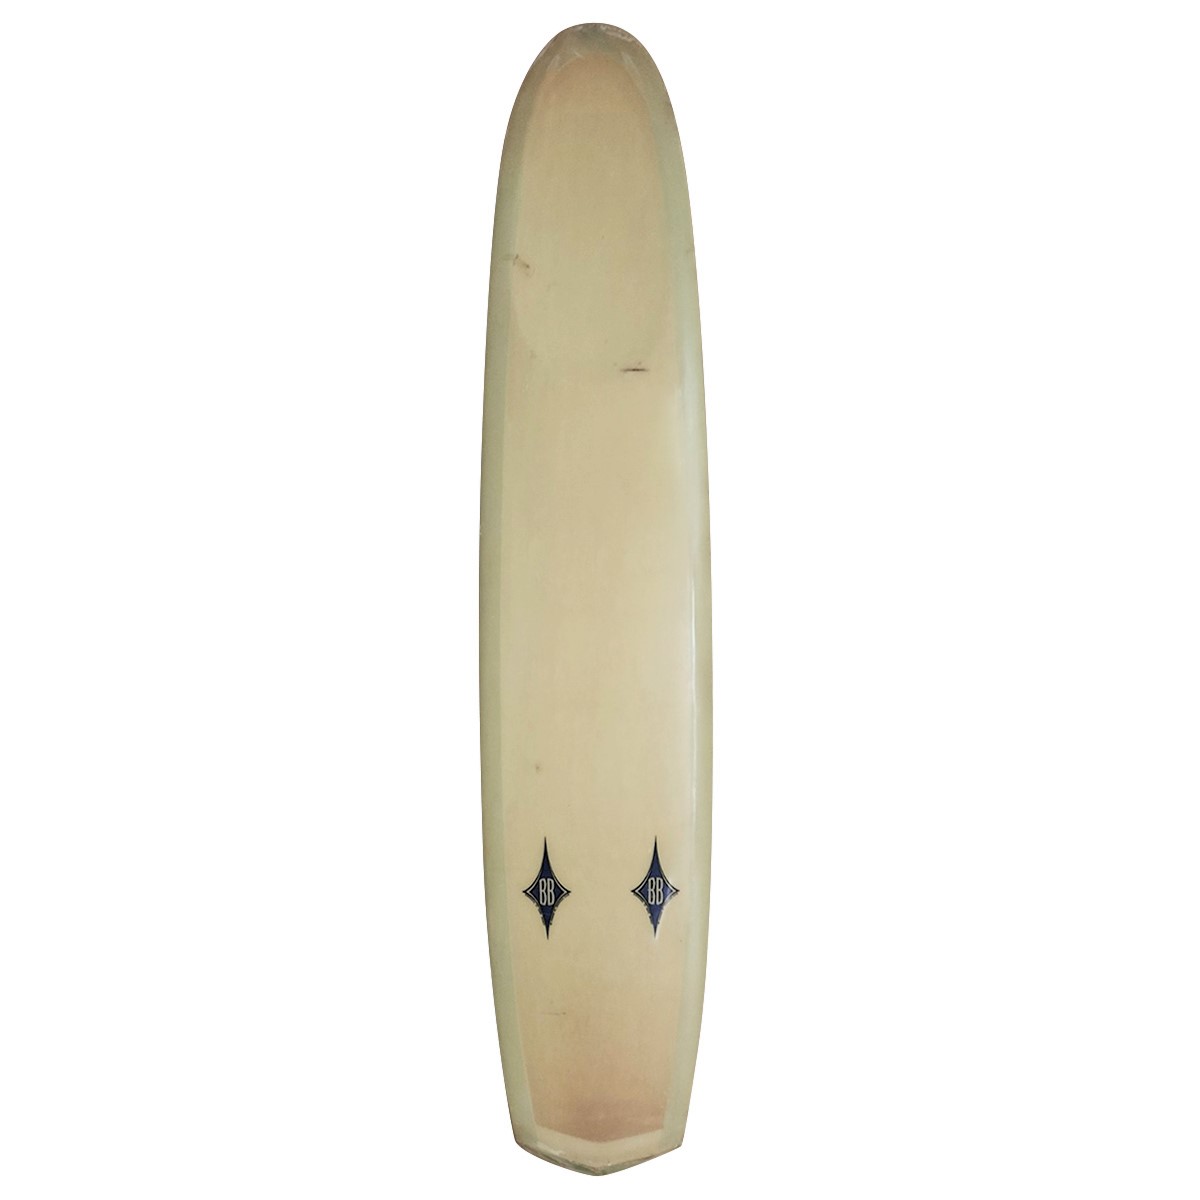 BENNETT SURFBOARDS / BENNETT SURFBOARDS / 60`S SINGLE FIN